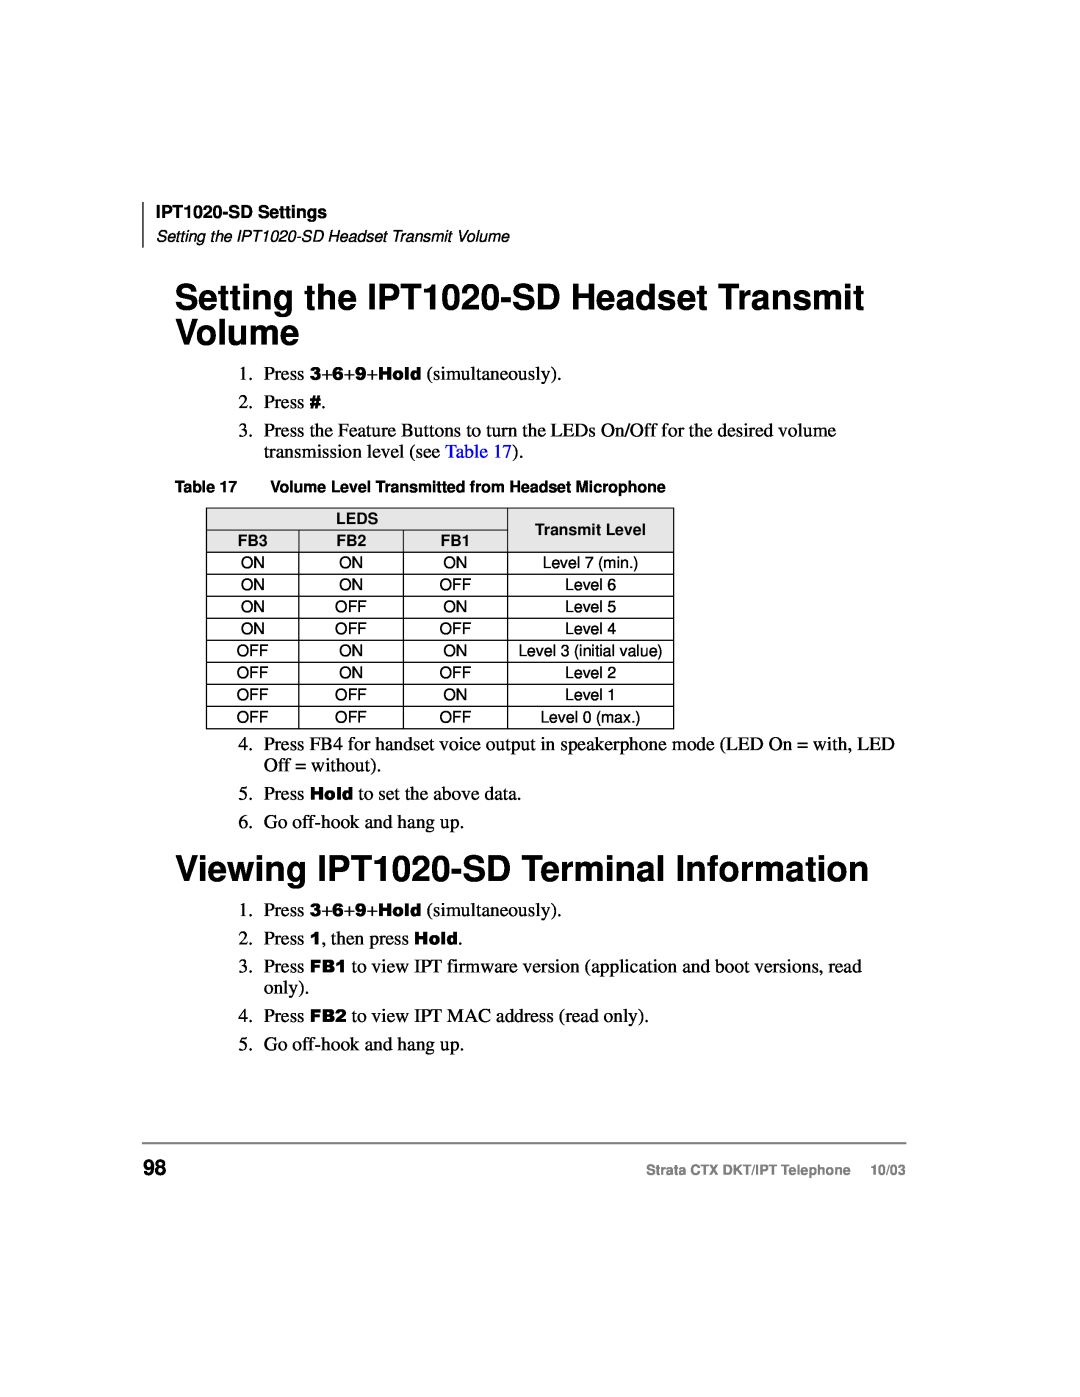 Toshiba DKT manual Setting the IPT1020-SD Headset Transmit Volume, Viewing IPT1020-SD Terminal Information 